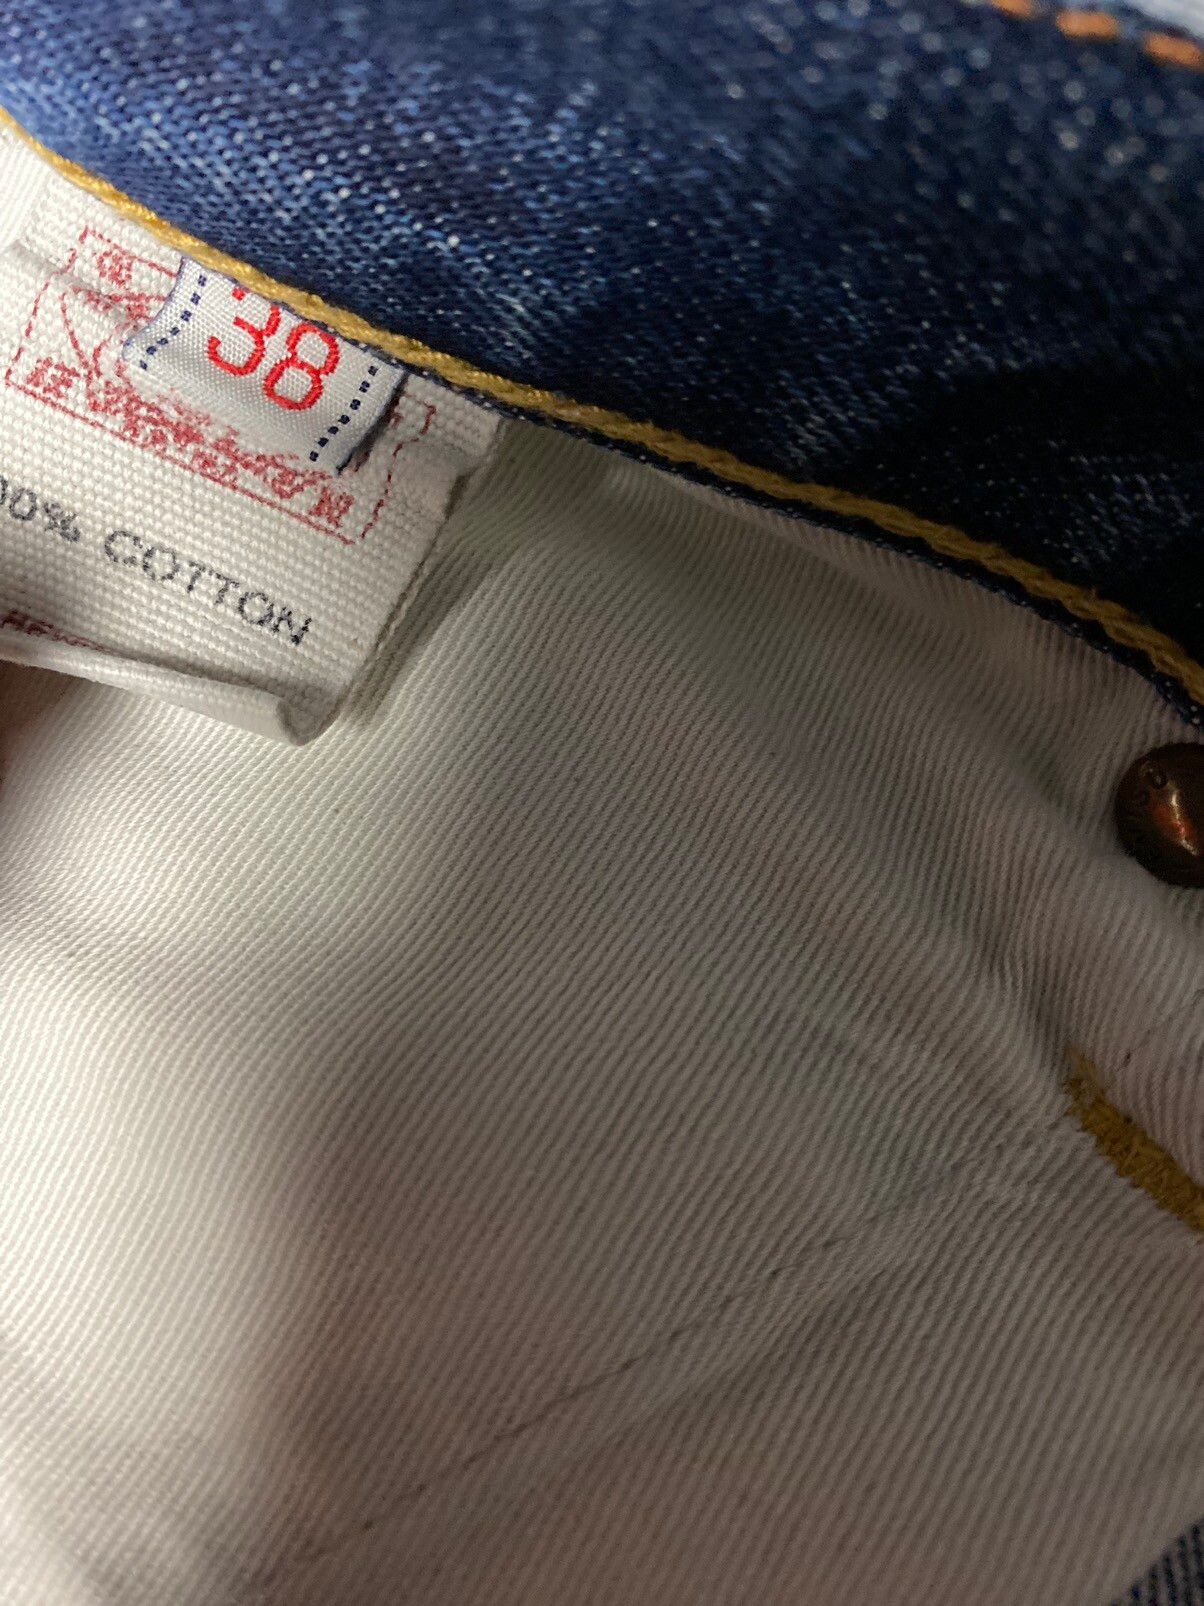 Vintage Evisu Japan vintage blue jeans denim pants big seagull logo Size US 38 / EU 54 - 12 Preview